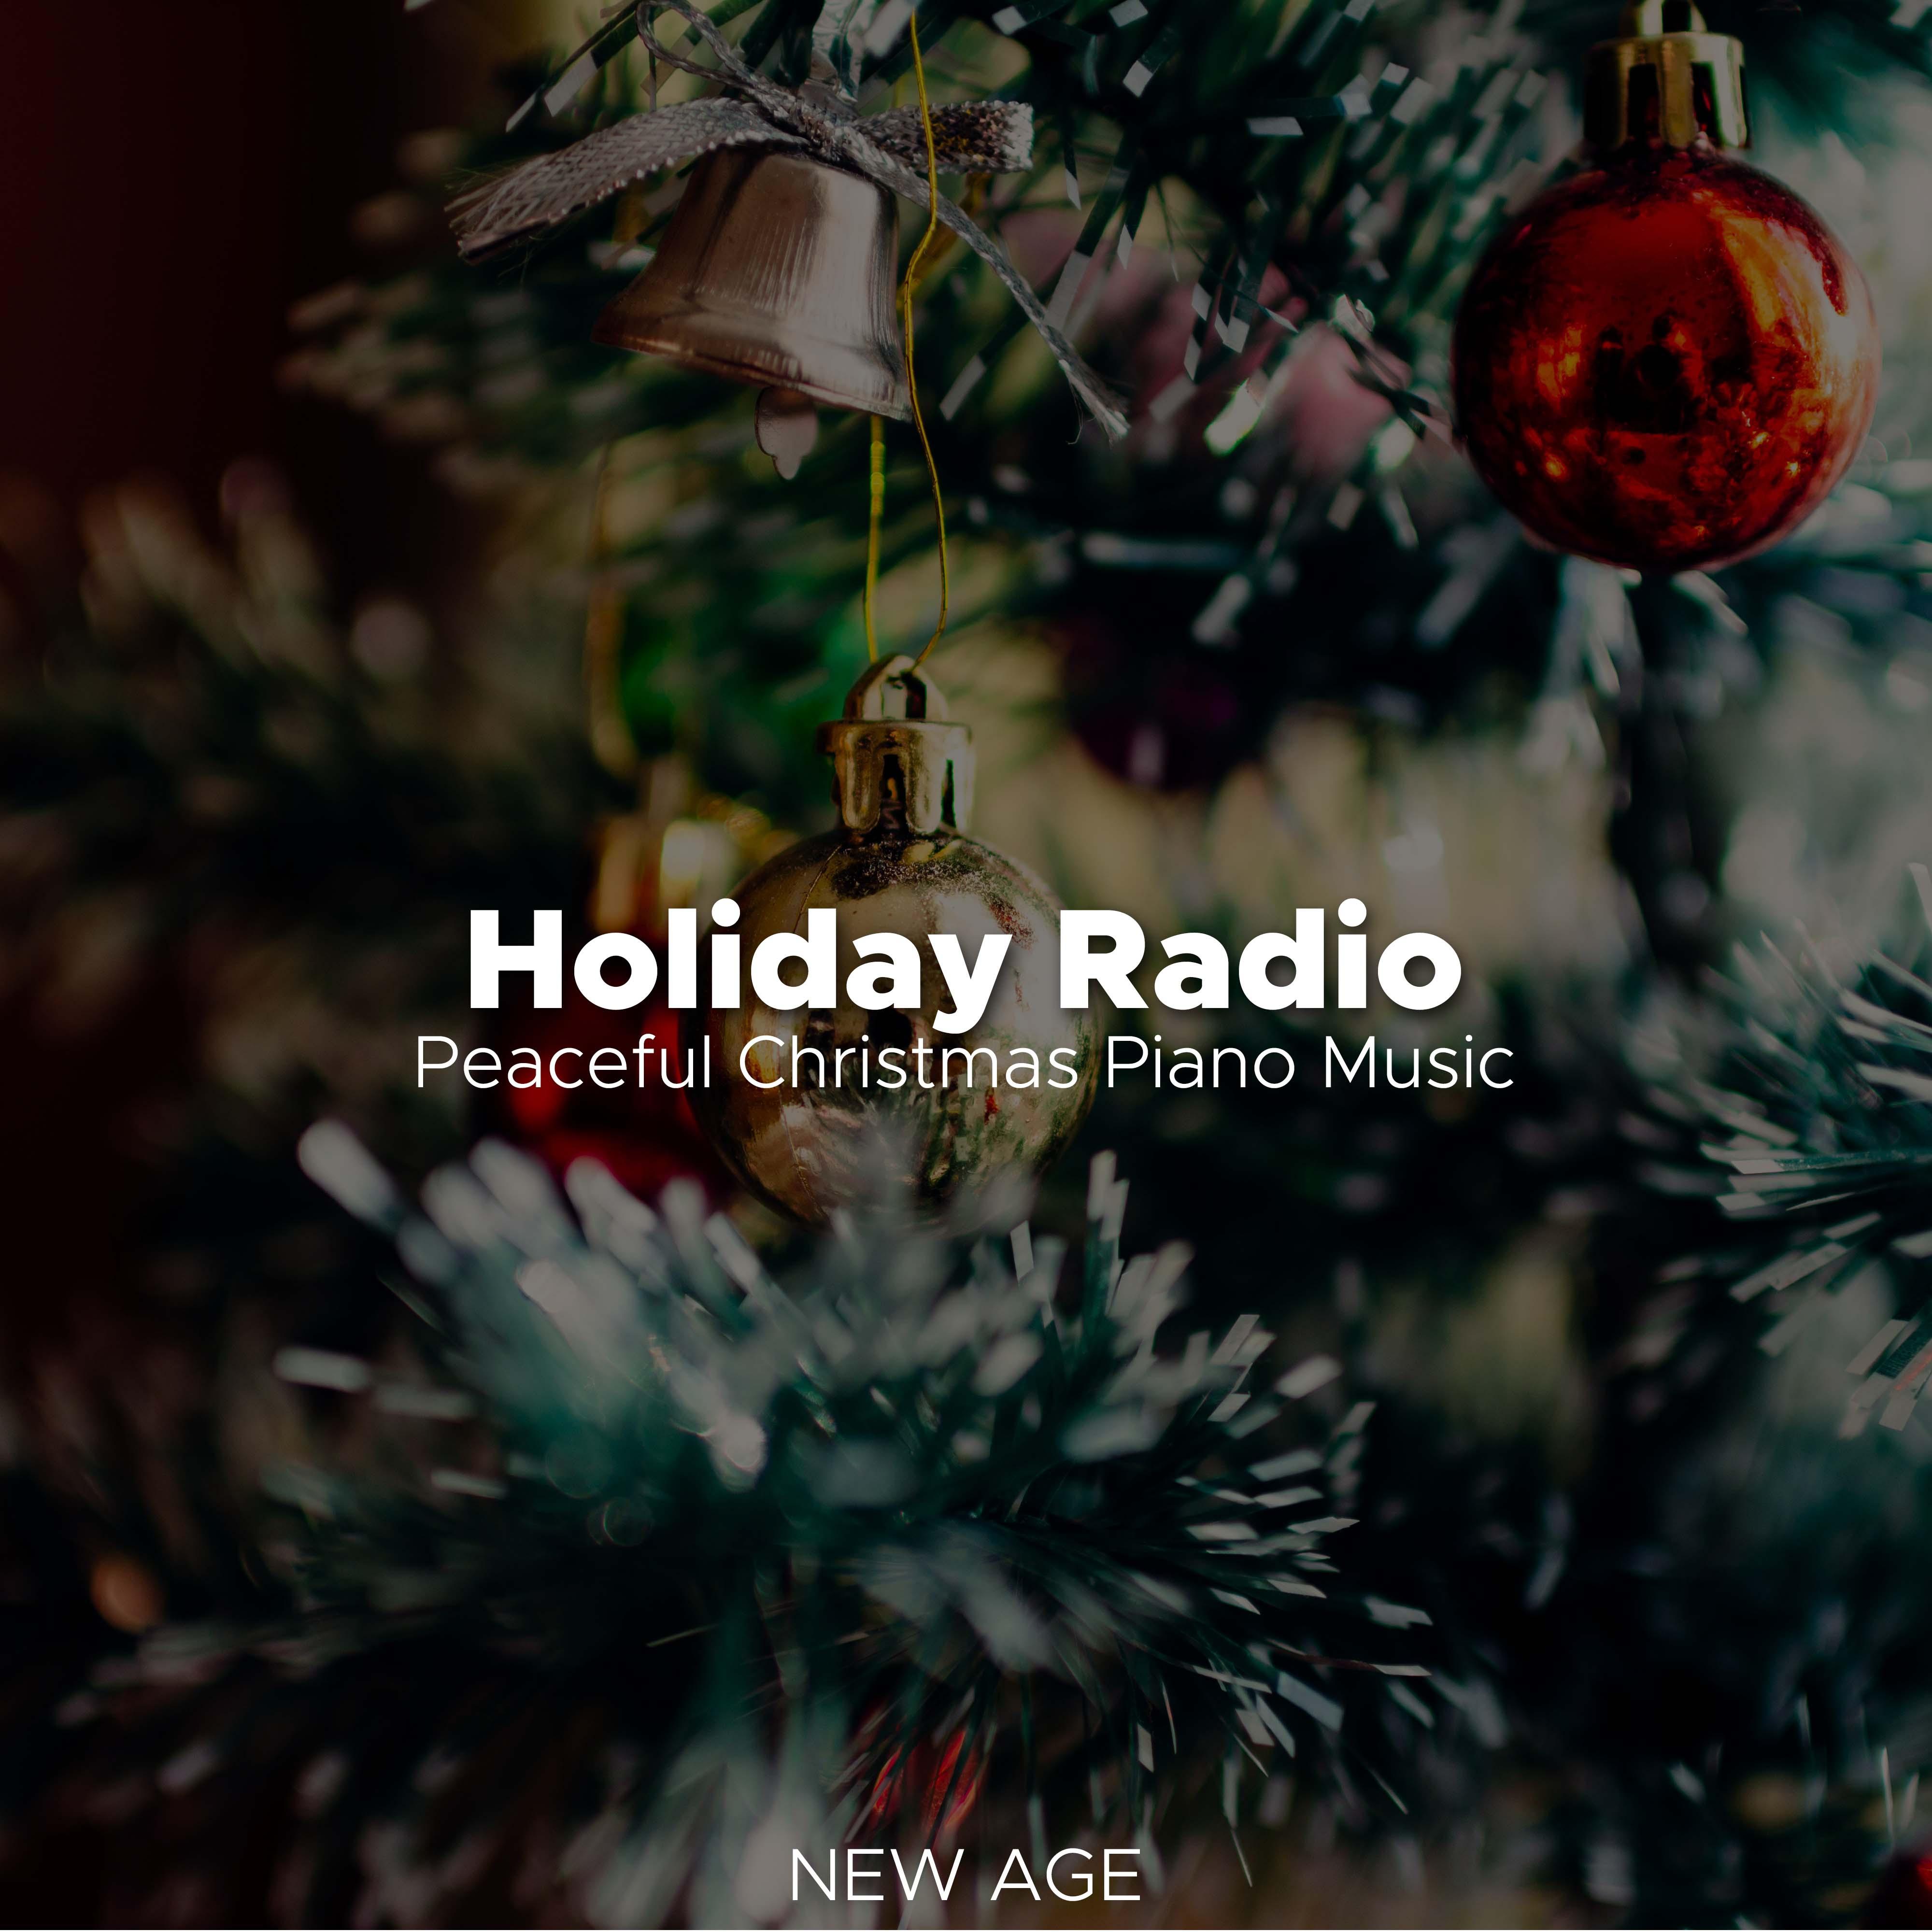 Holiday Radio: Atmospheric, Uplifting, and Peaceful Christmas Piano Music